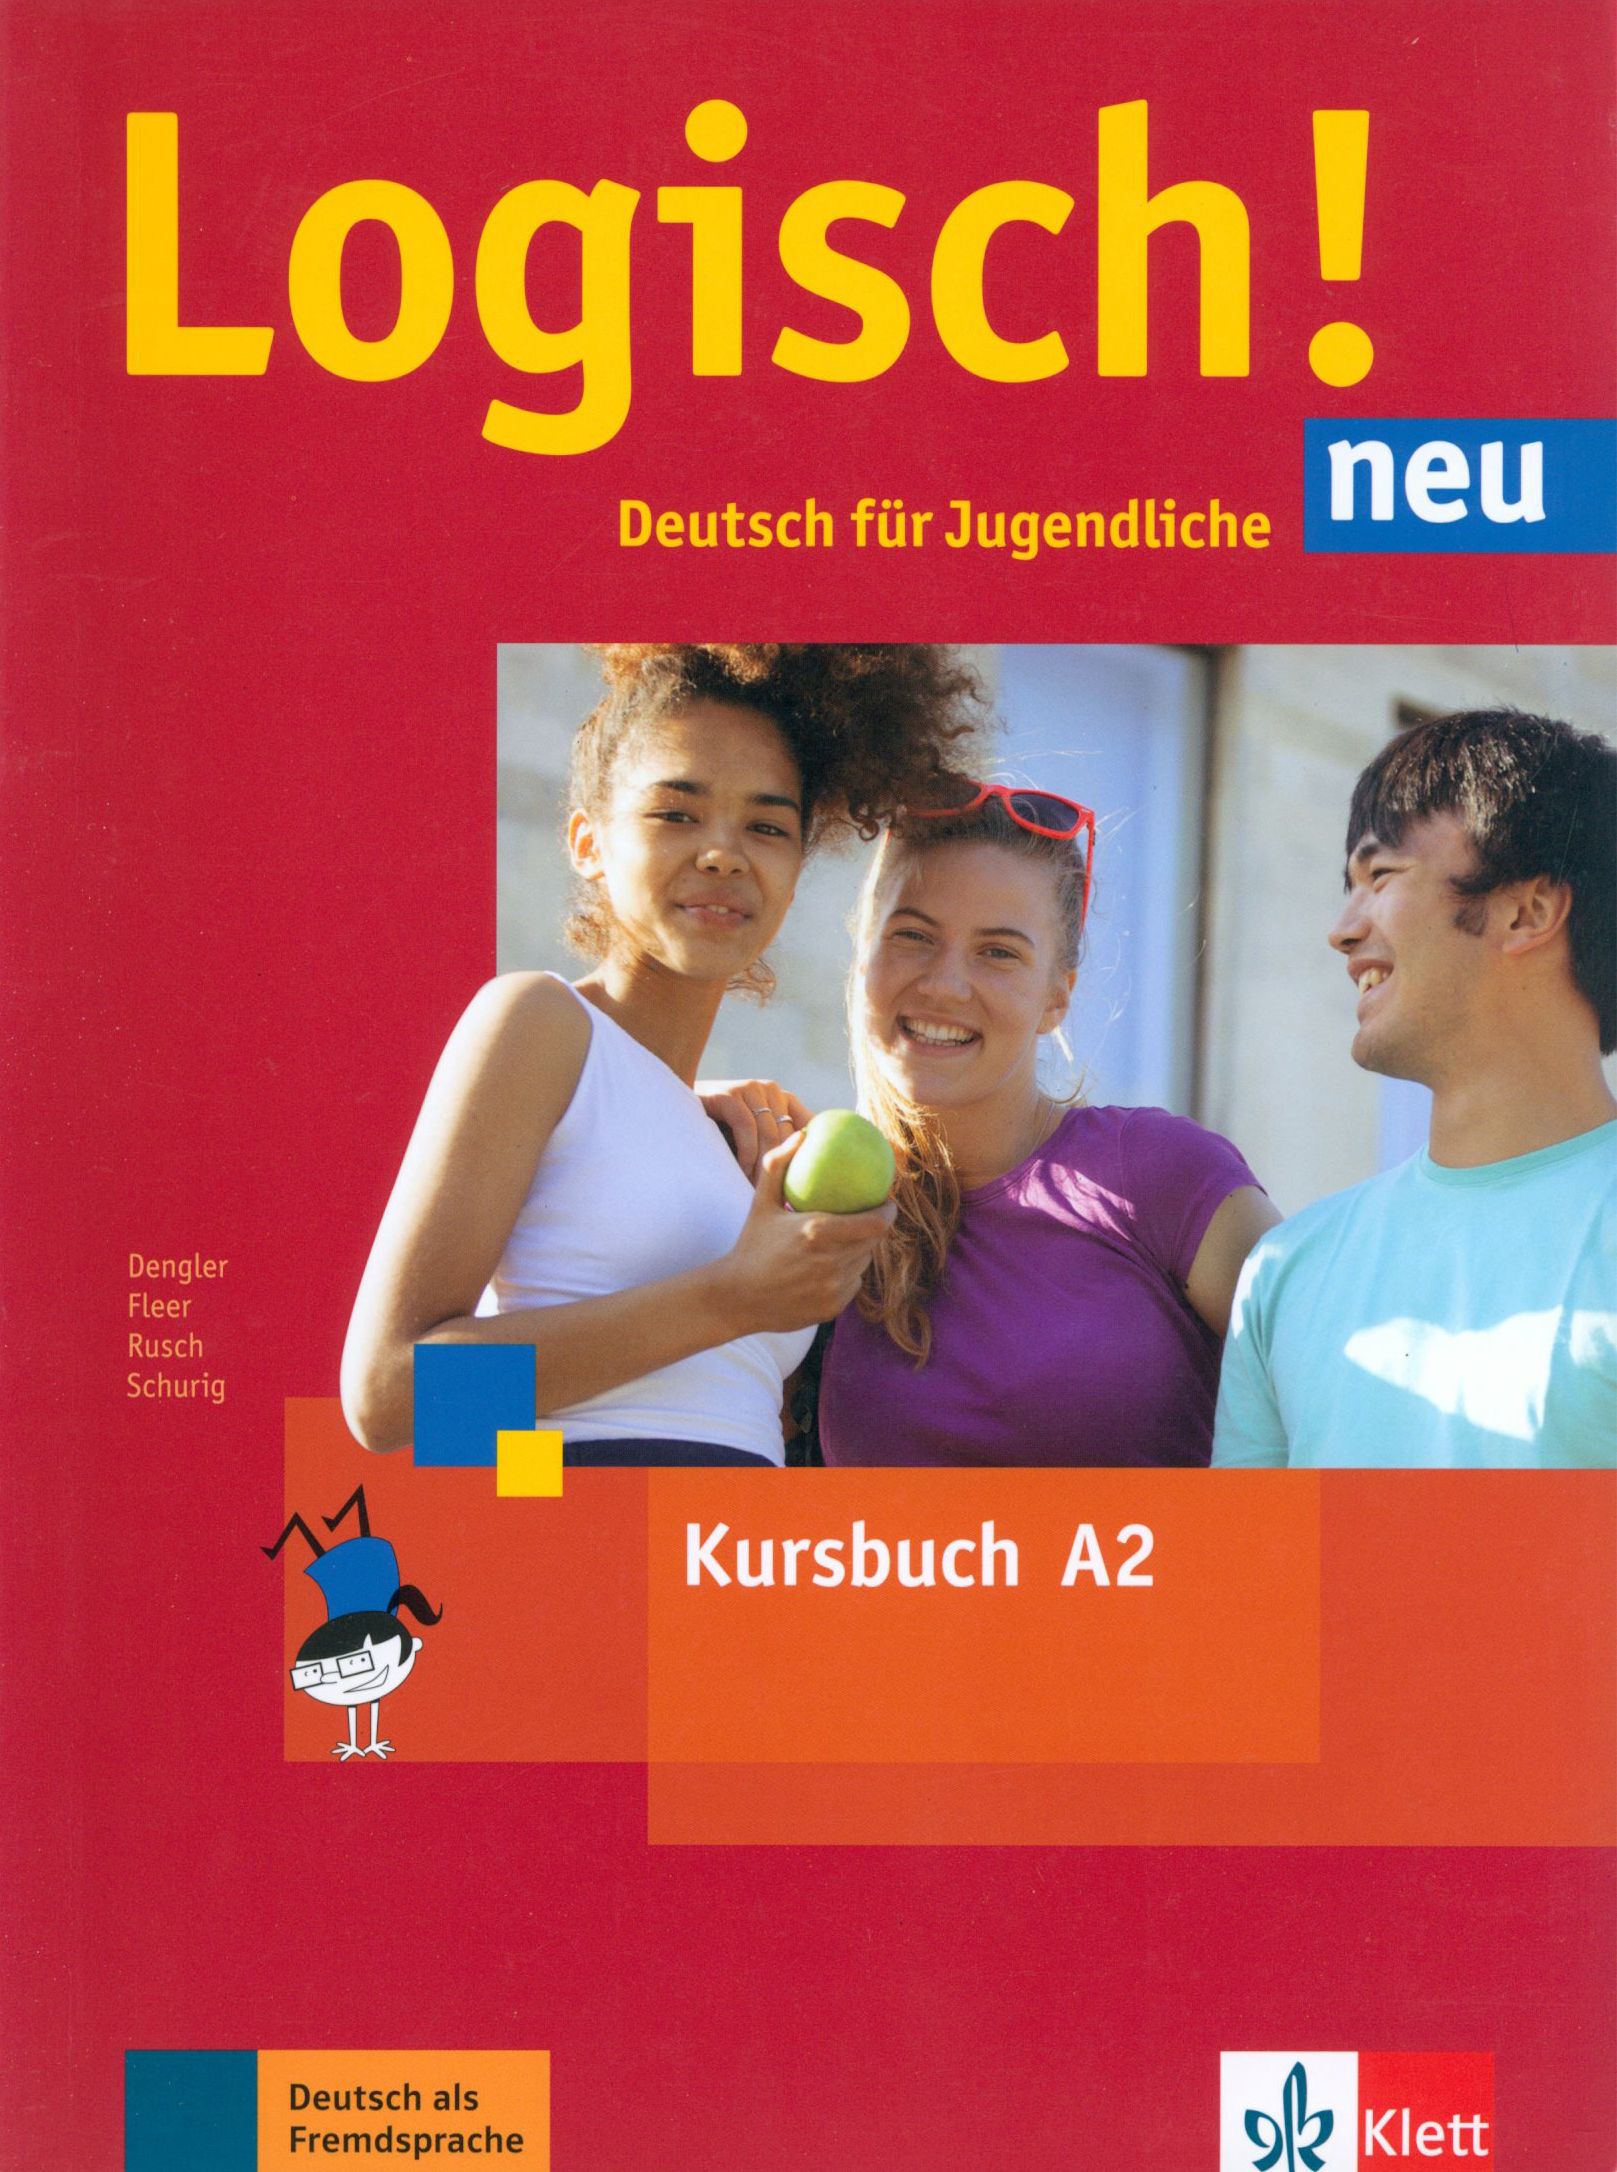 Kursbuch a2. Planetino 2 Audio Kursbuch. Учебник по немецкому а2. Учебник по немецкому Klett. Немецкий язык аудио учебник